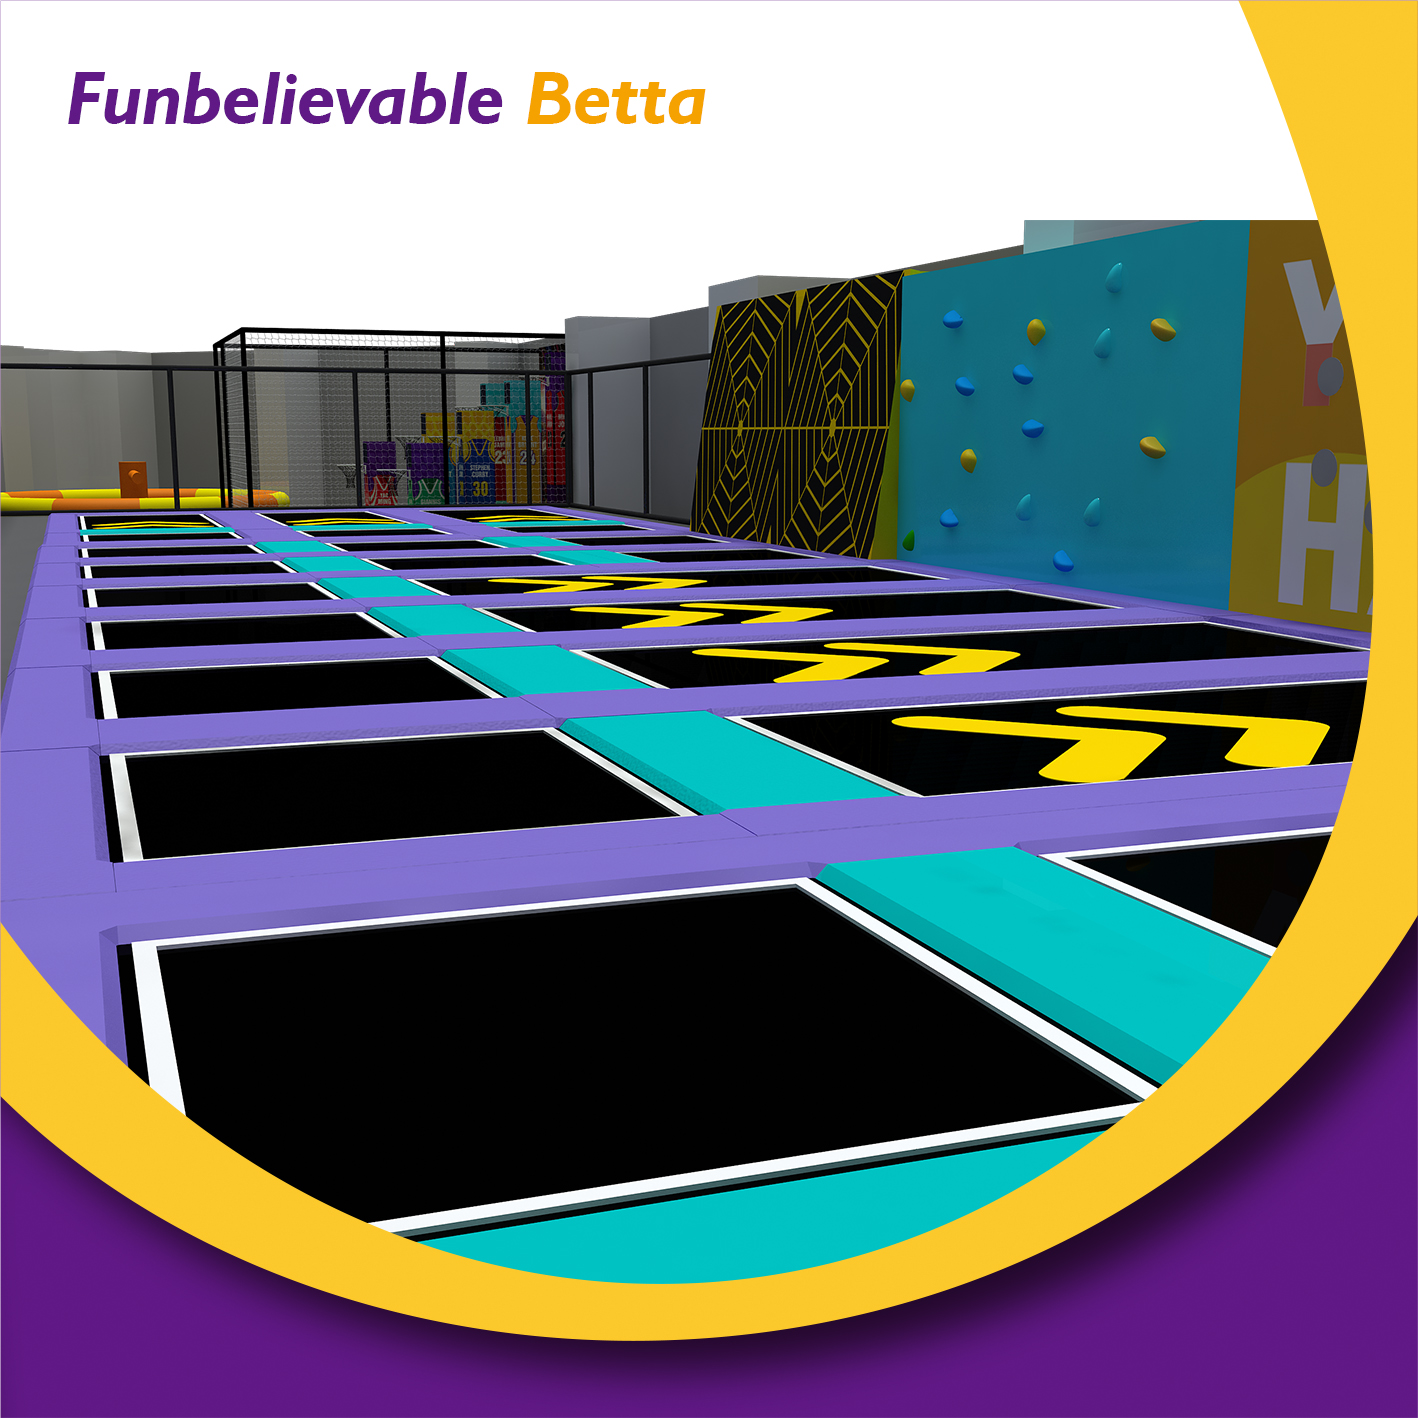 Bettaplay play center jump kids area indoor trampoline park jumping sports playground